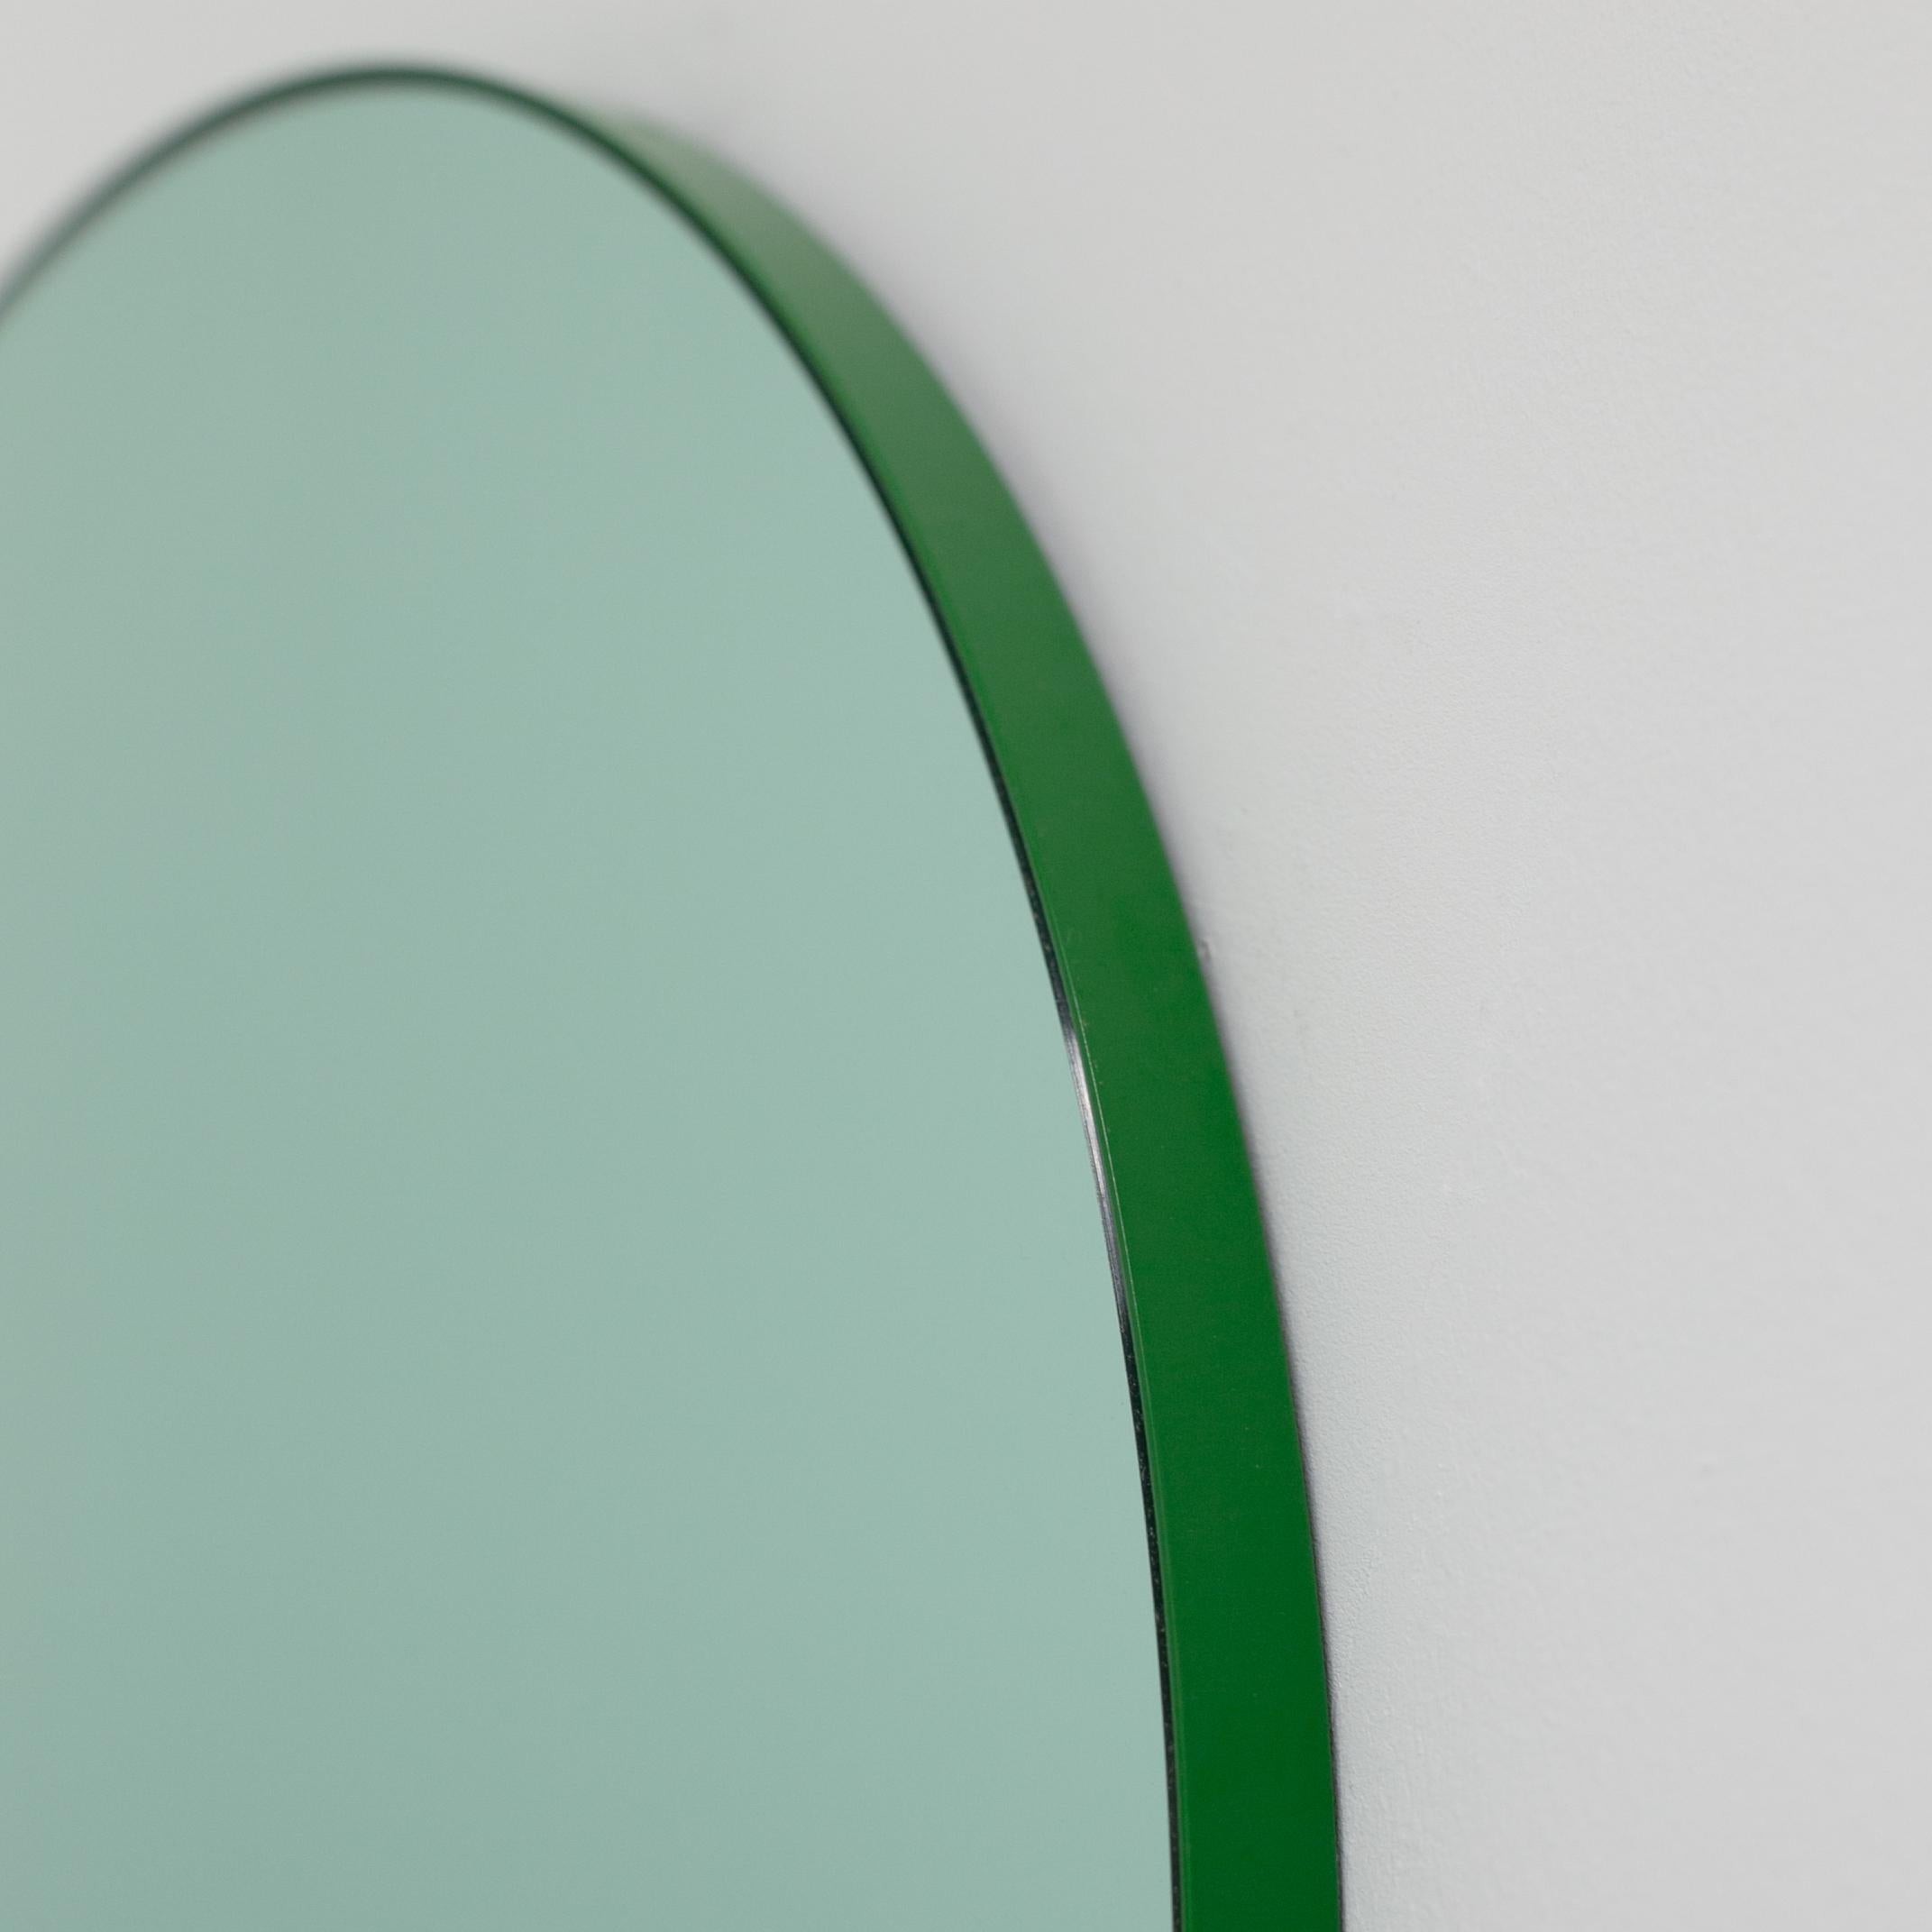 Orbis Green Tinted Modern Round Mirror with Green Frame - Medium 3